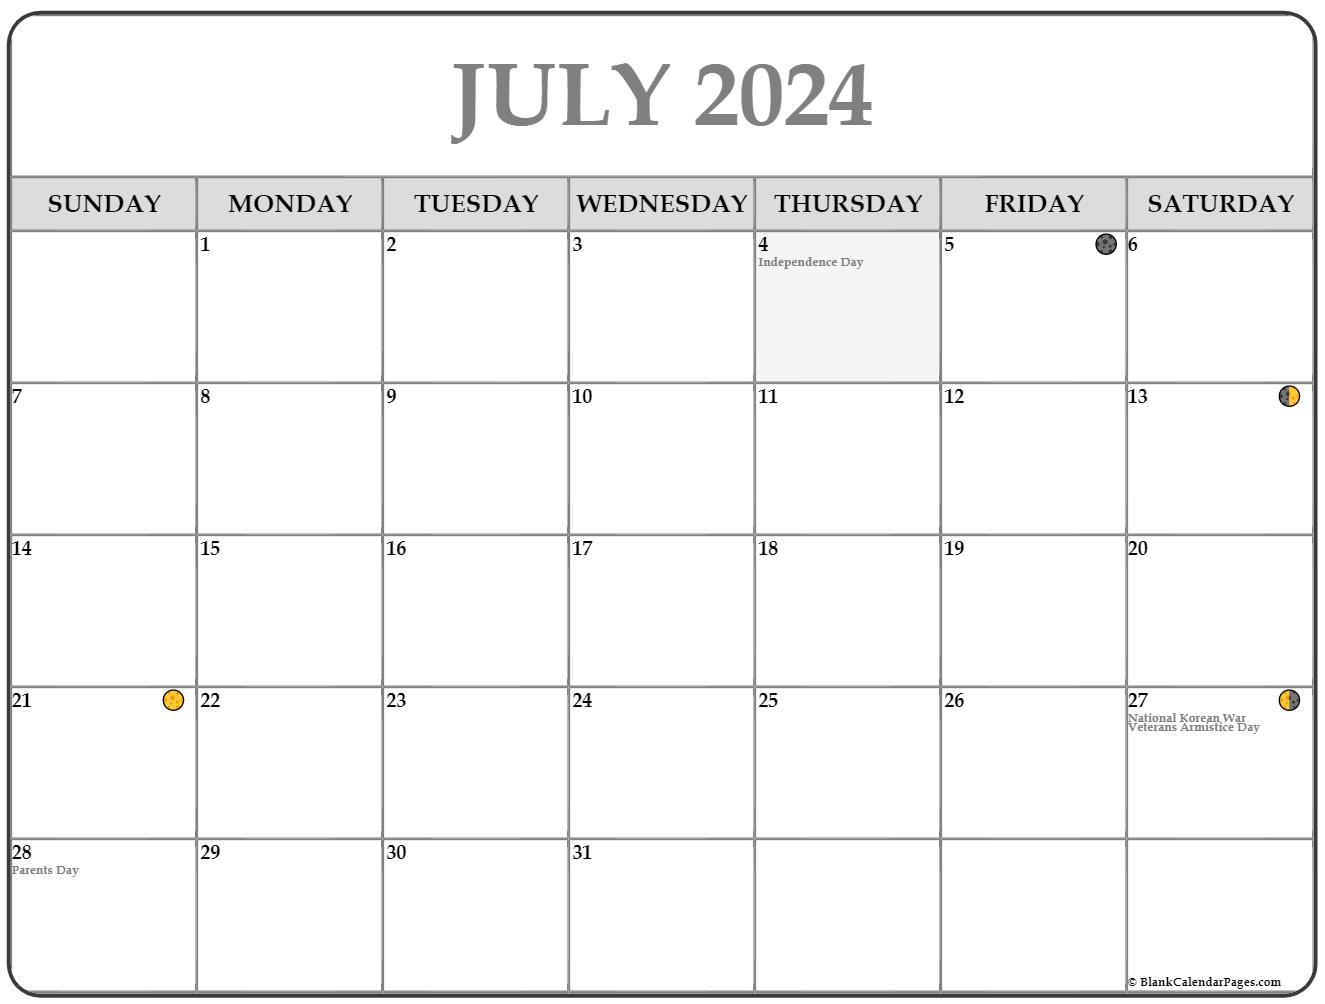 July 2024 Lunar Calendar | Moon Phase Calendar | Calendar 2024